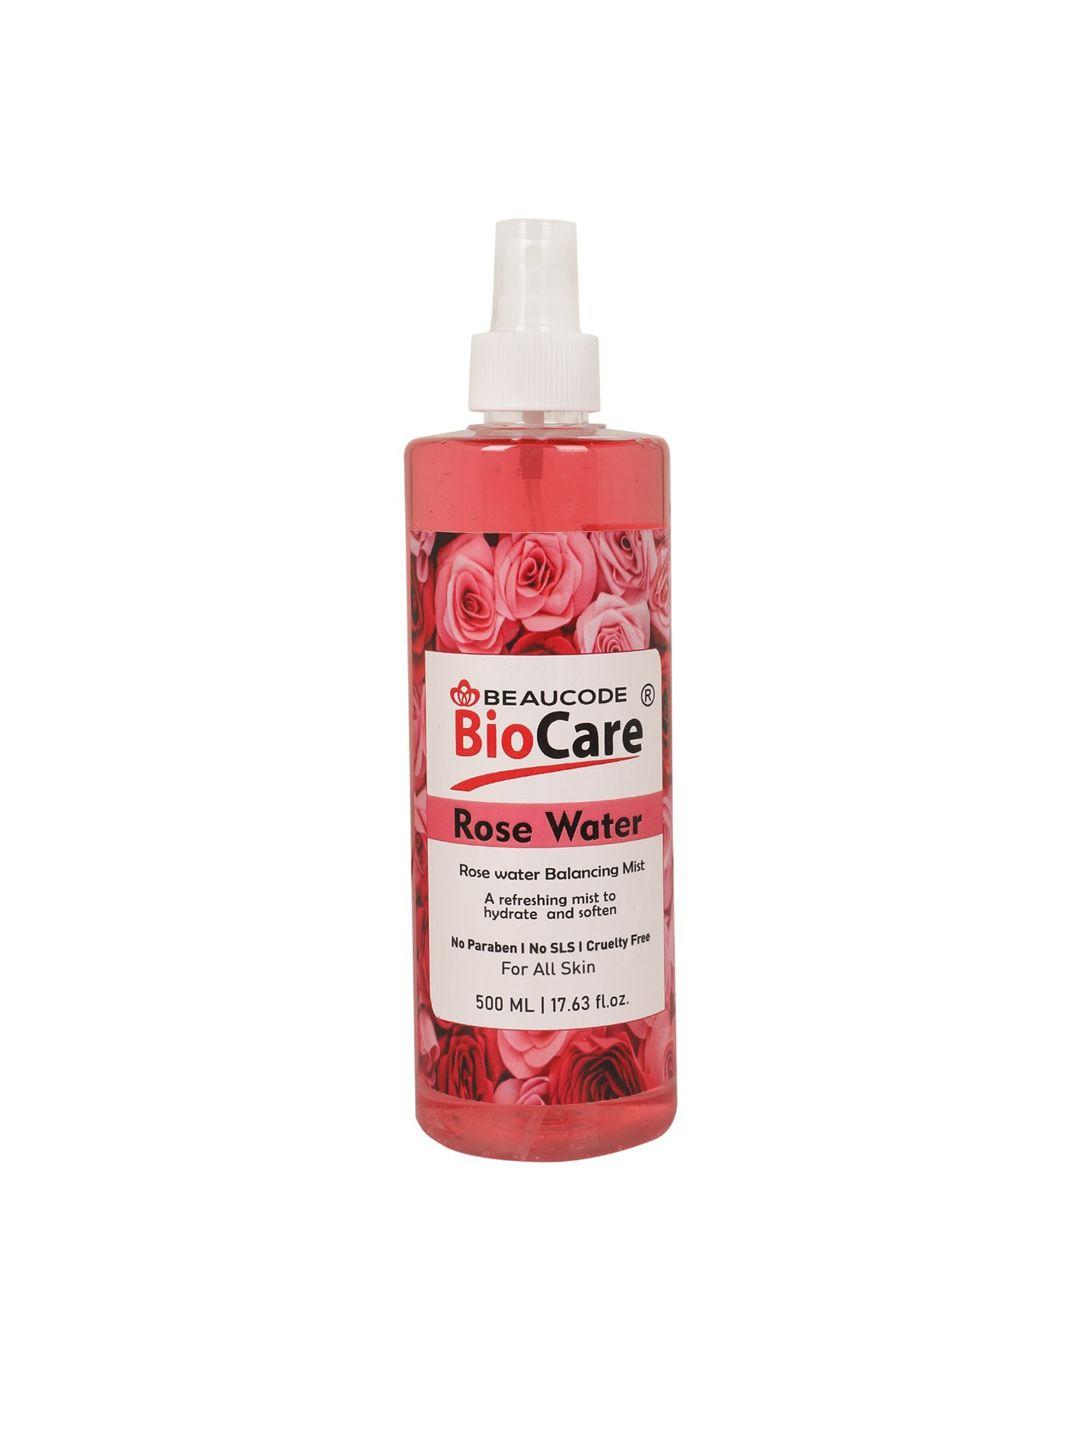 beaucode biocare rose water toner mist - 500ml